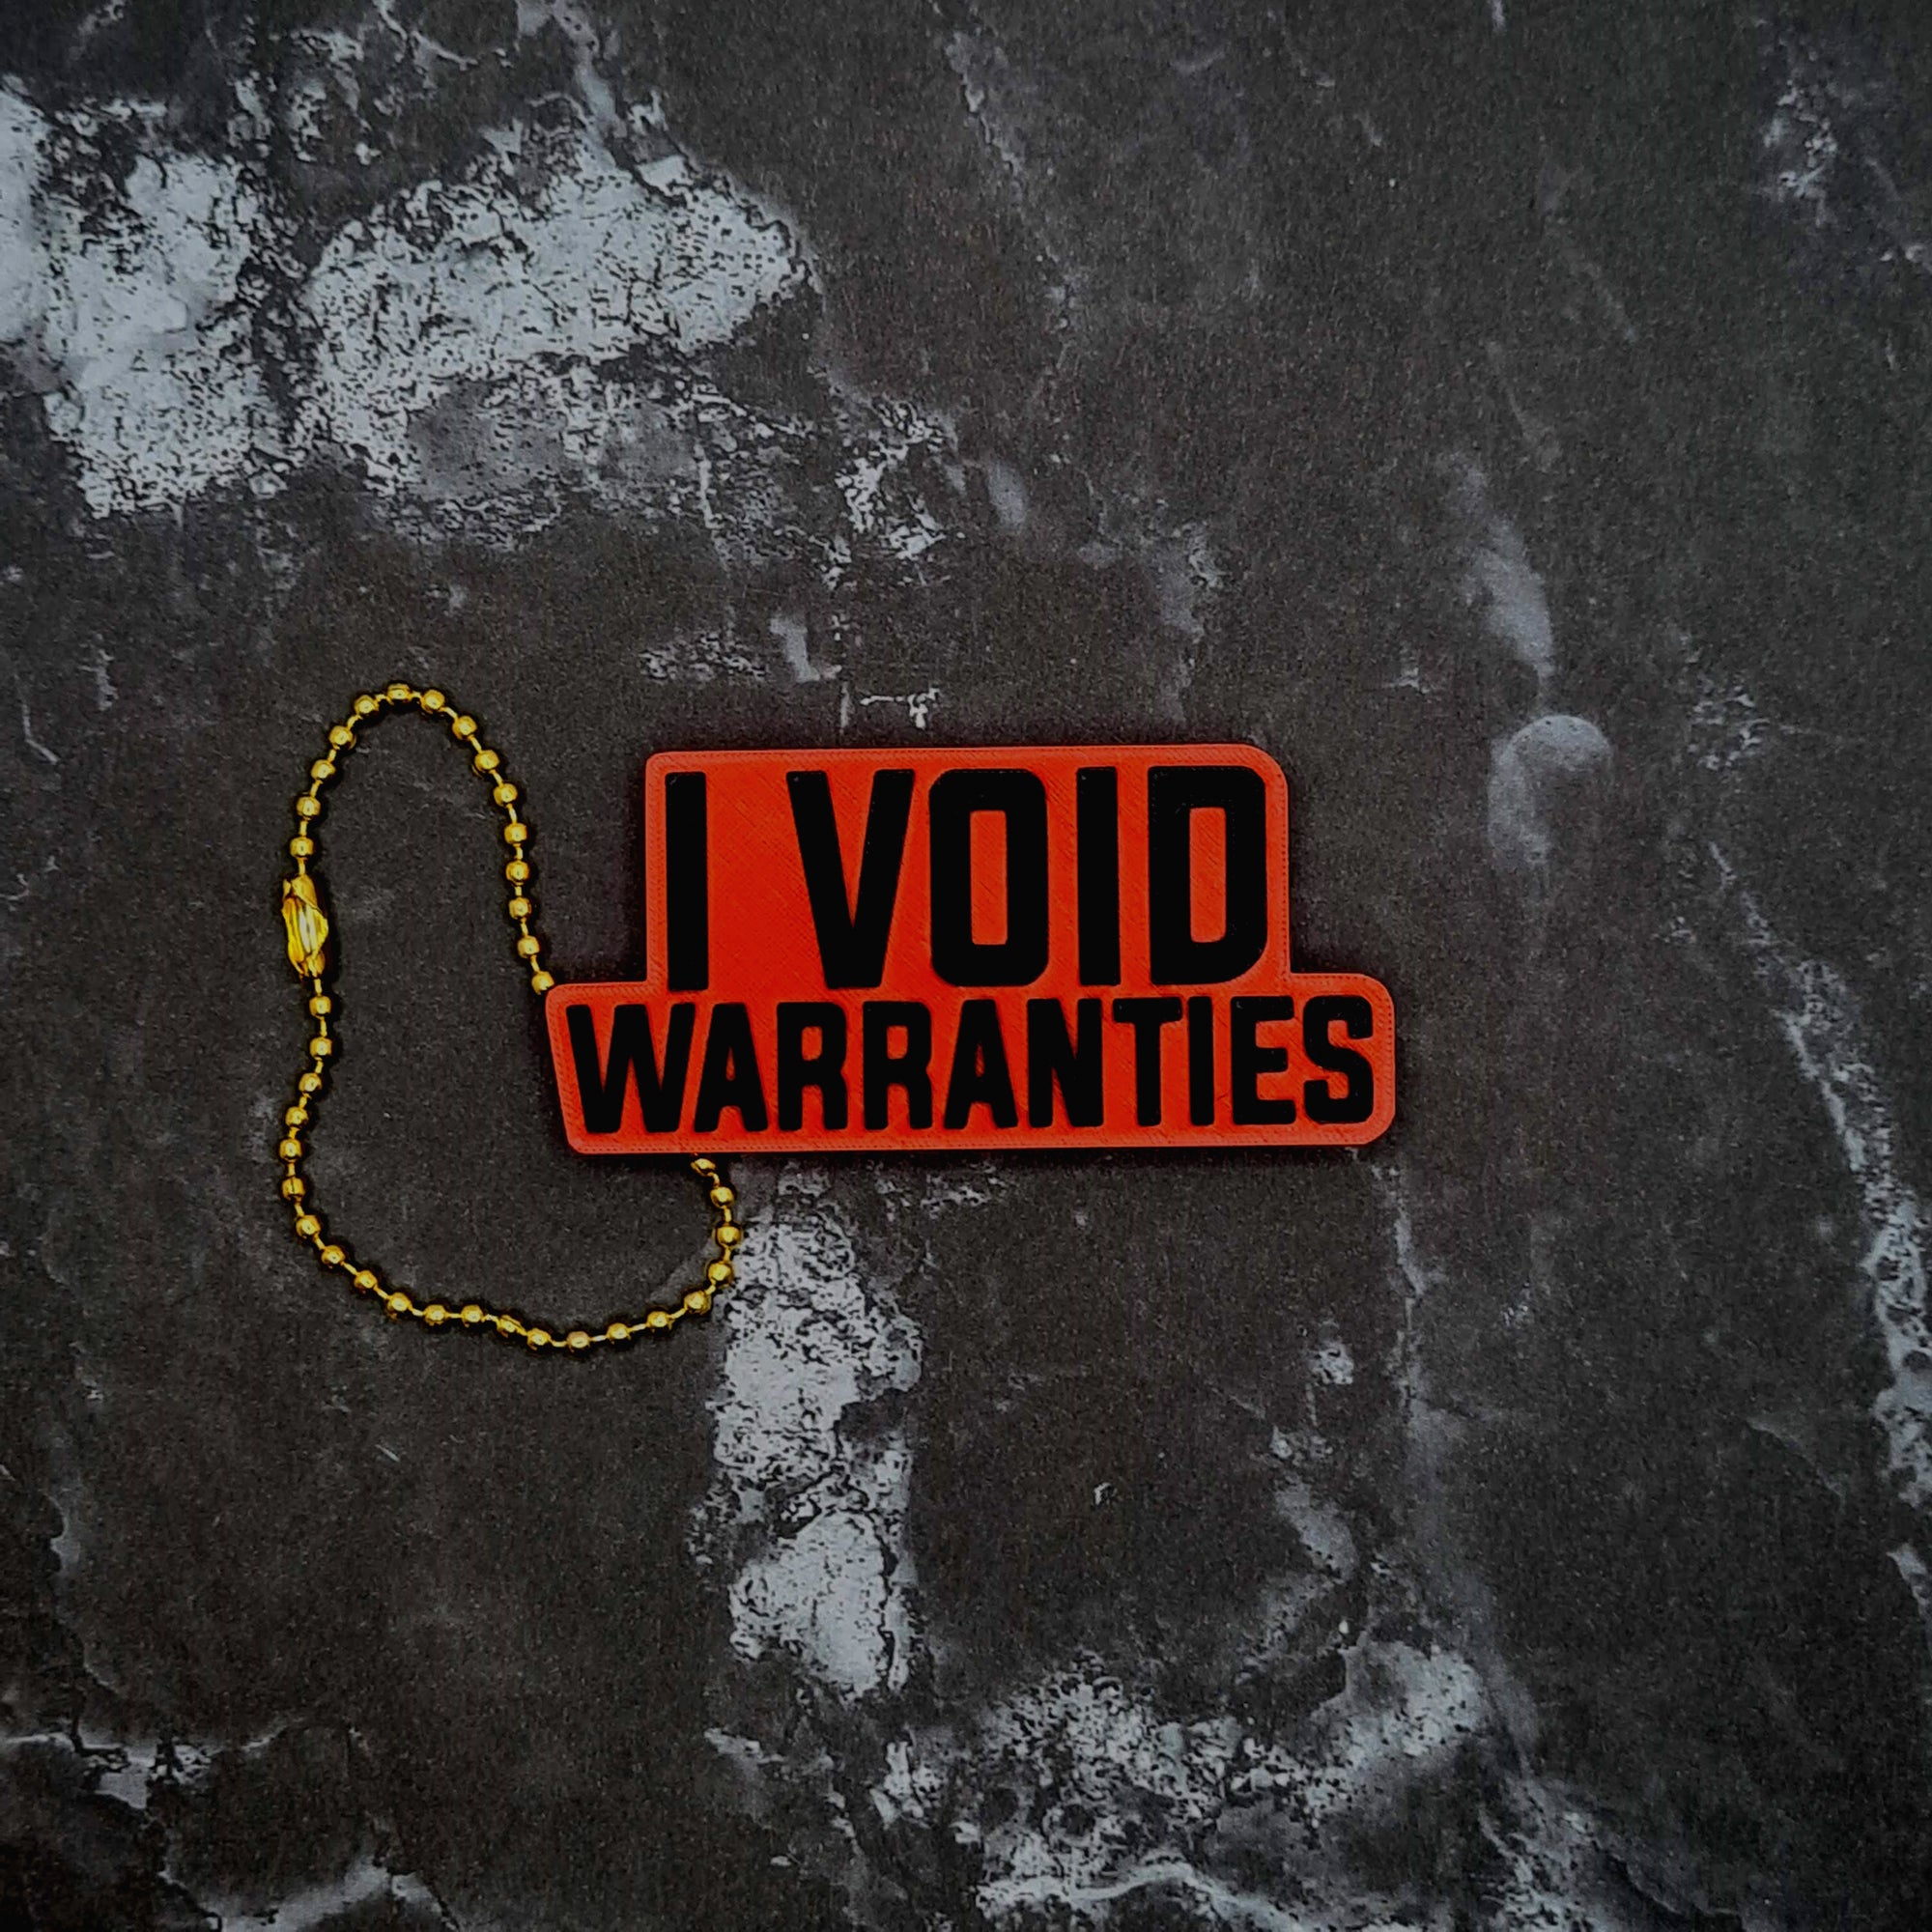 I Void Warranties Keychain!